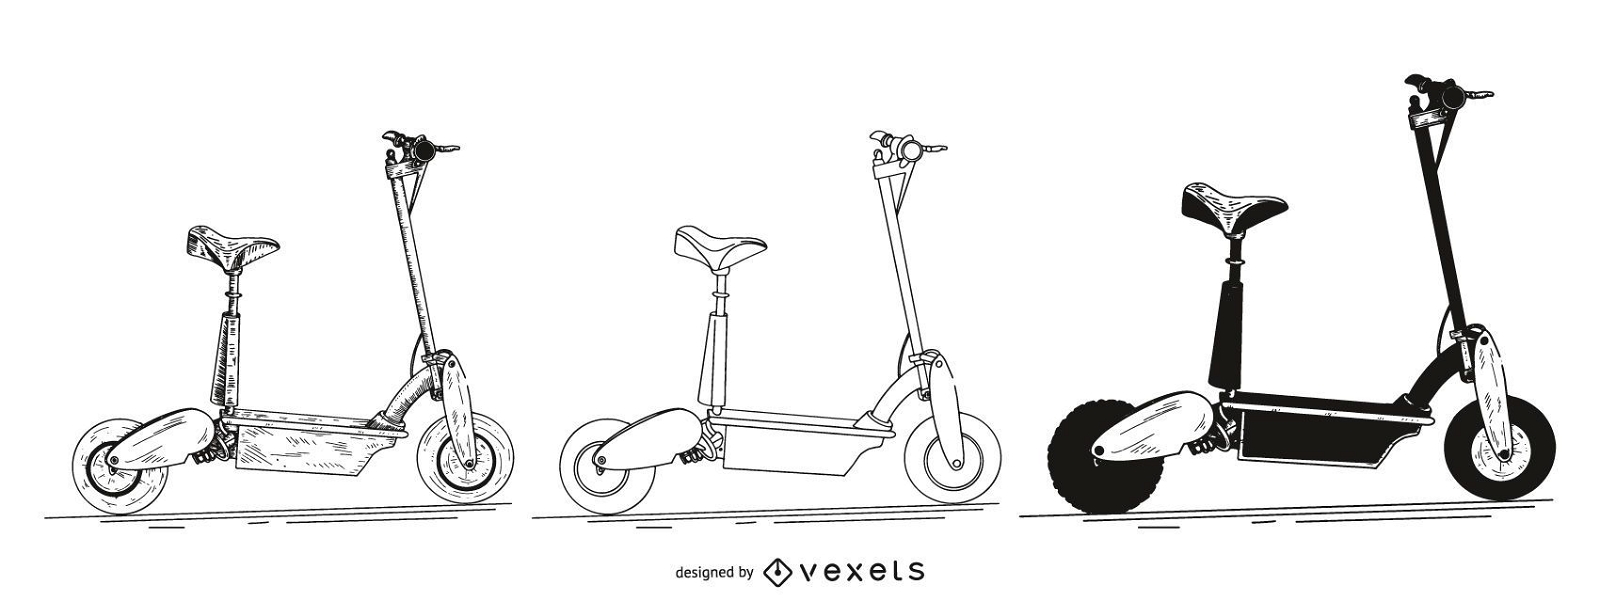 electric scooter set illustration